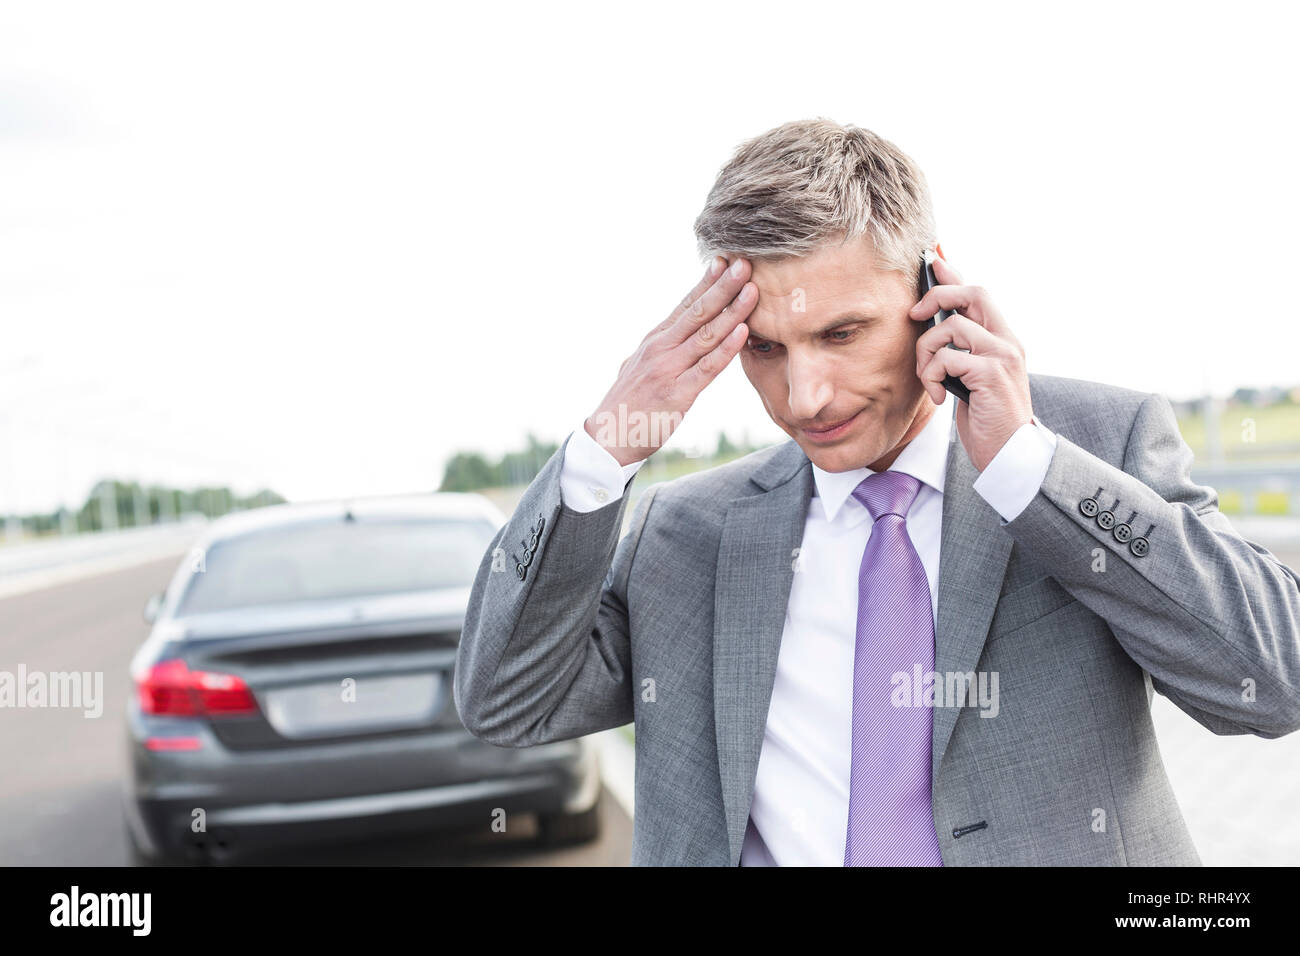 Tensed businessman talking on mobile phone against breakdown car Stock Photo